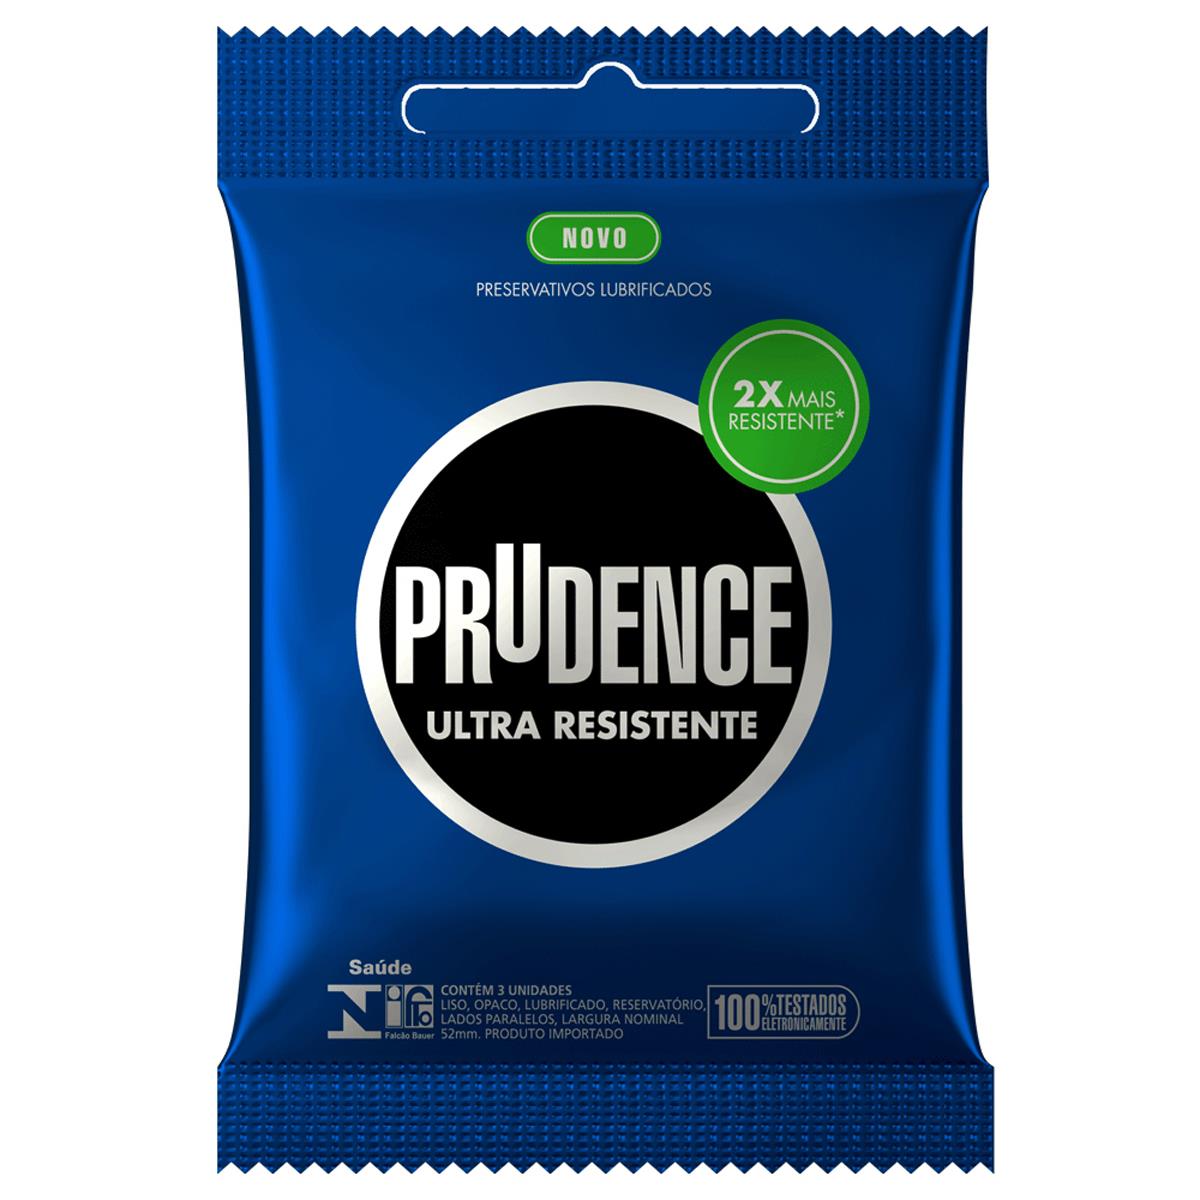 Preservativos Ultra Resistente Prudence